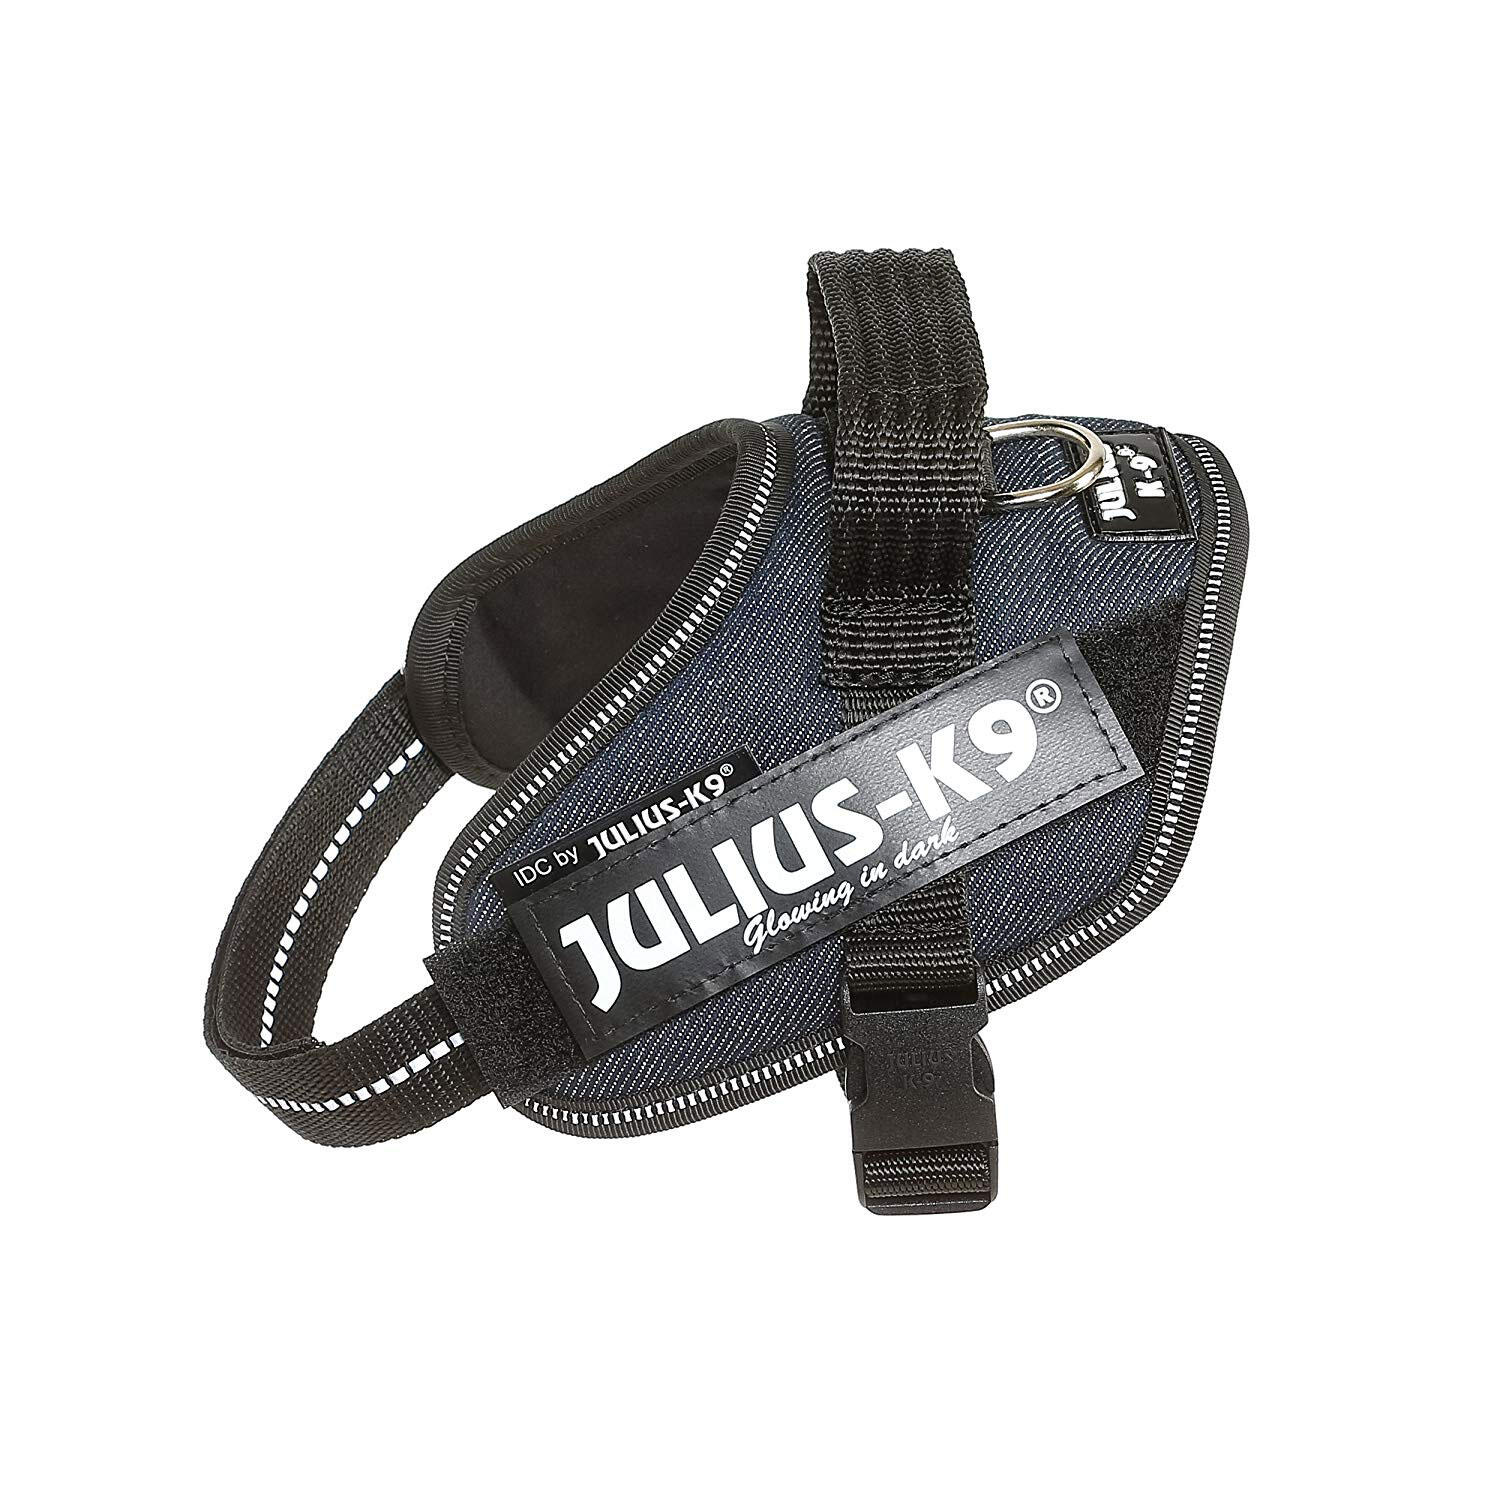 JULIUS-K9 Julius-K9 IDC Dog Powerharness